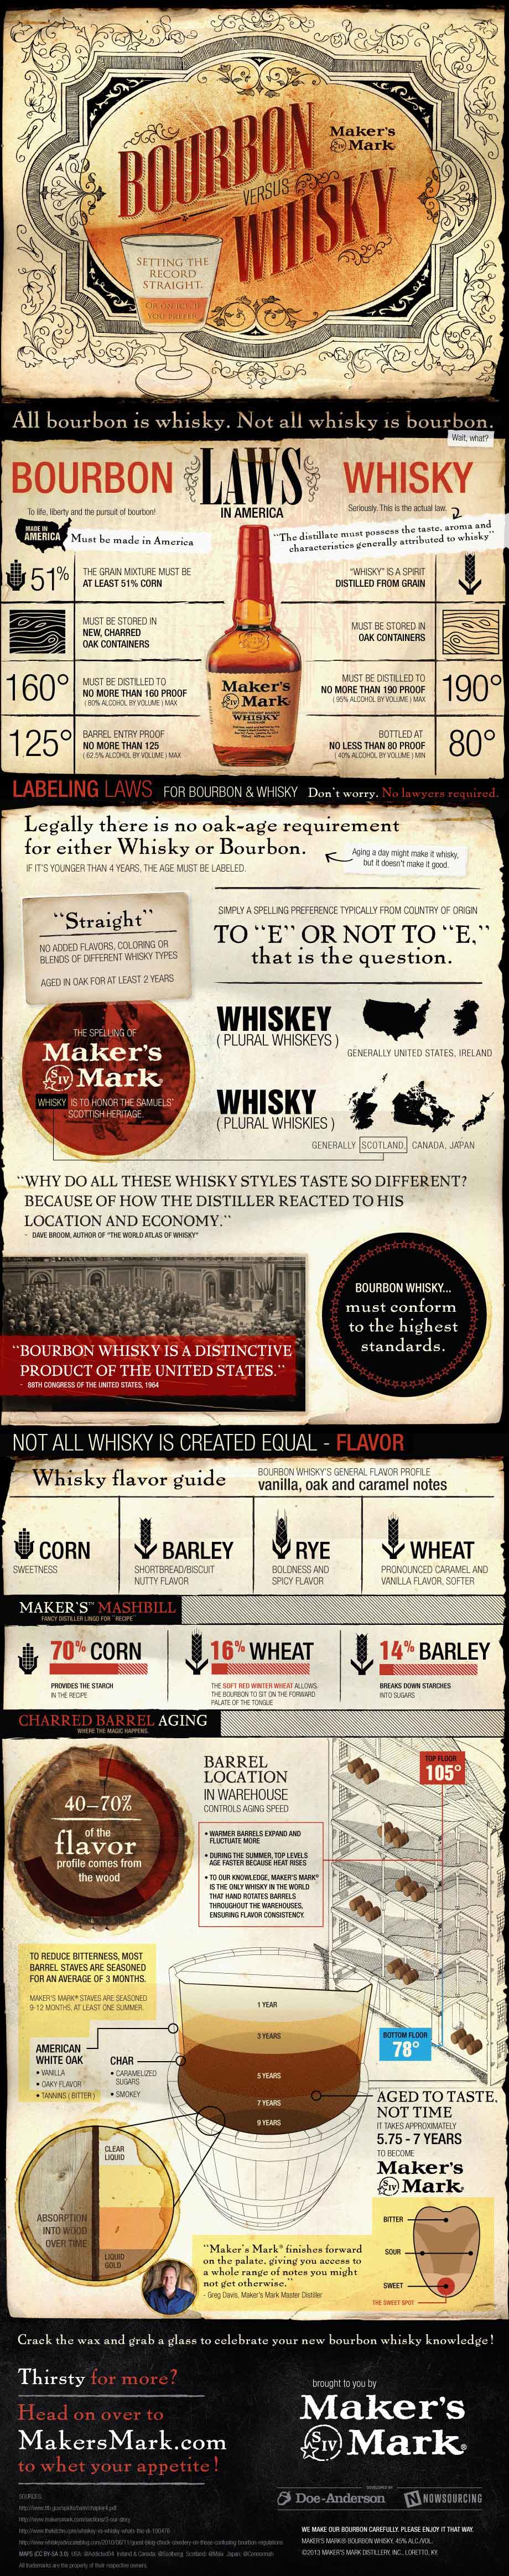 Bourbon vs Whiskey: Setting the Record Straight